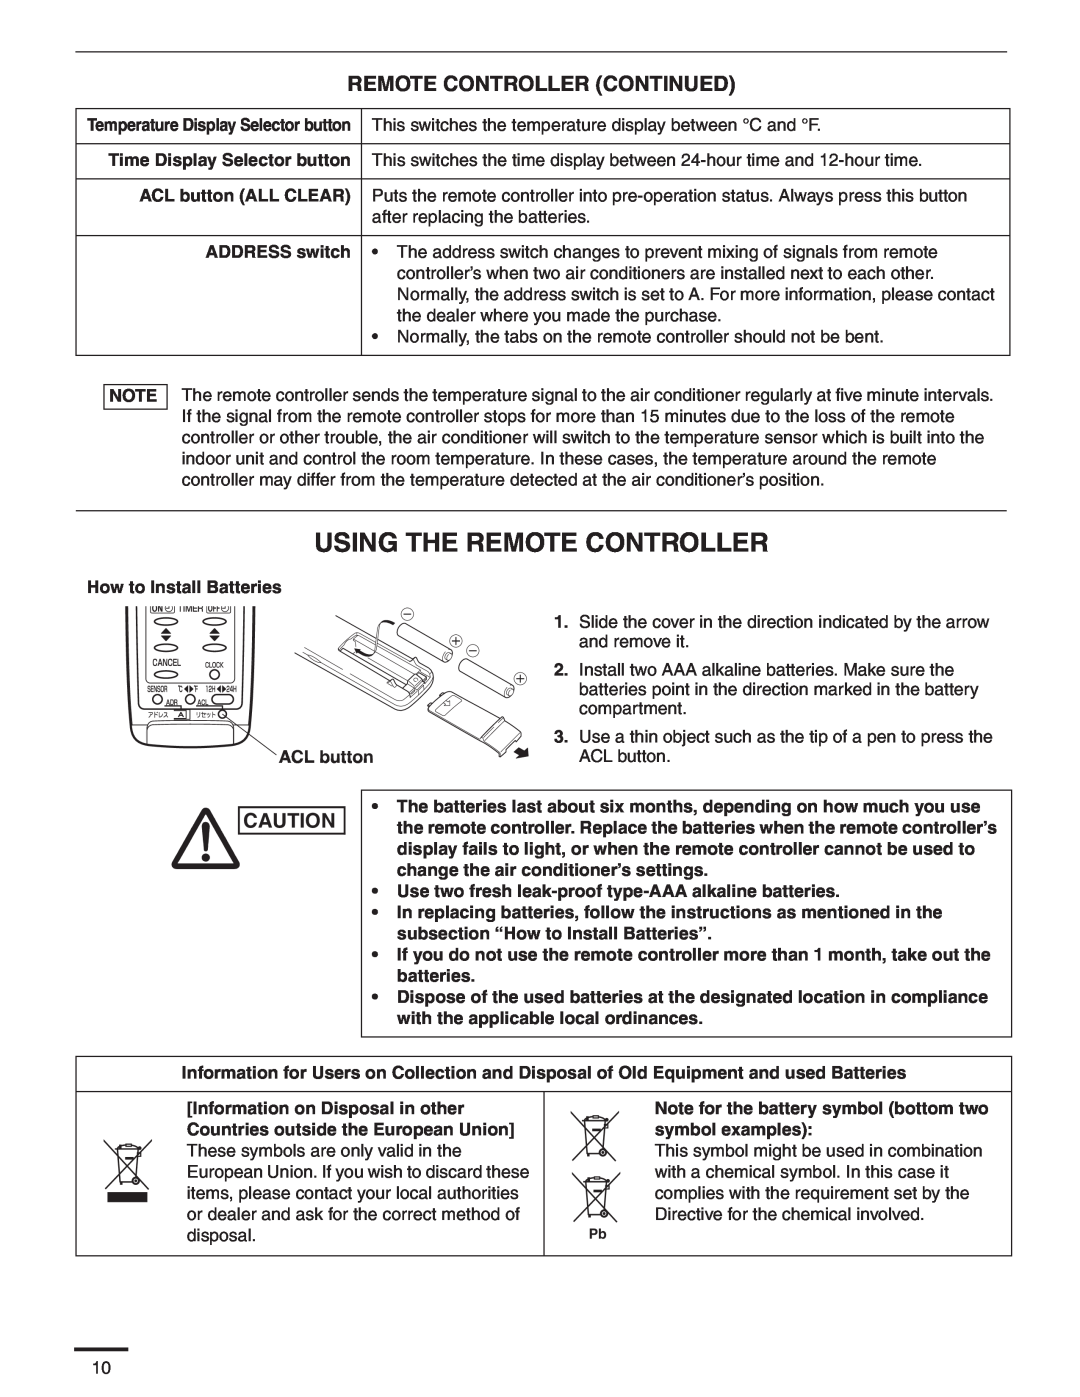 Panasonic CS-KS24NKU, CU-KS24NKUA service manual Using The Remote Controller, Remote Controller Continued 